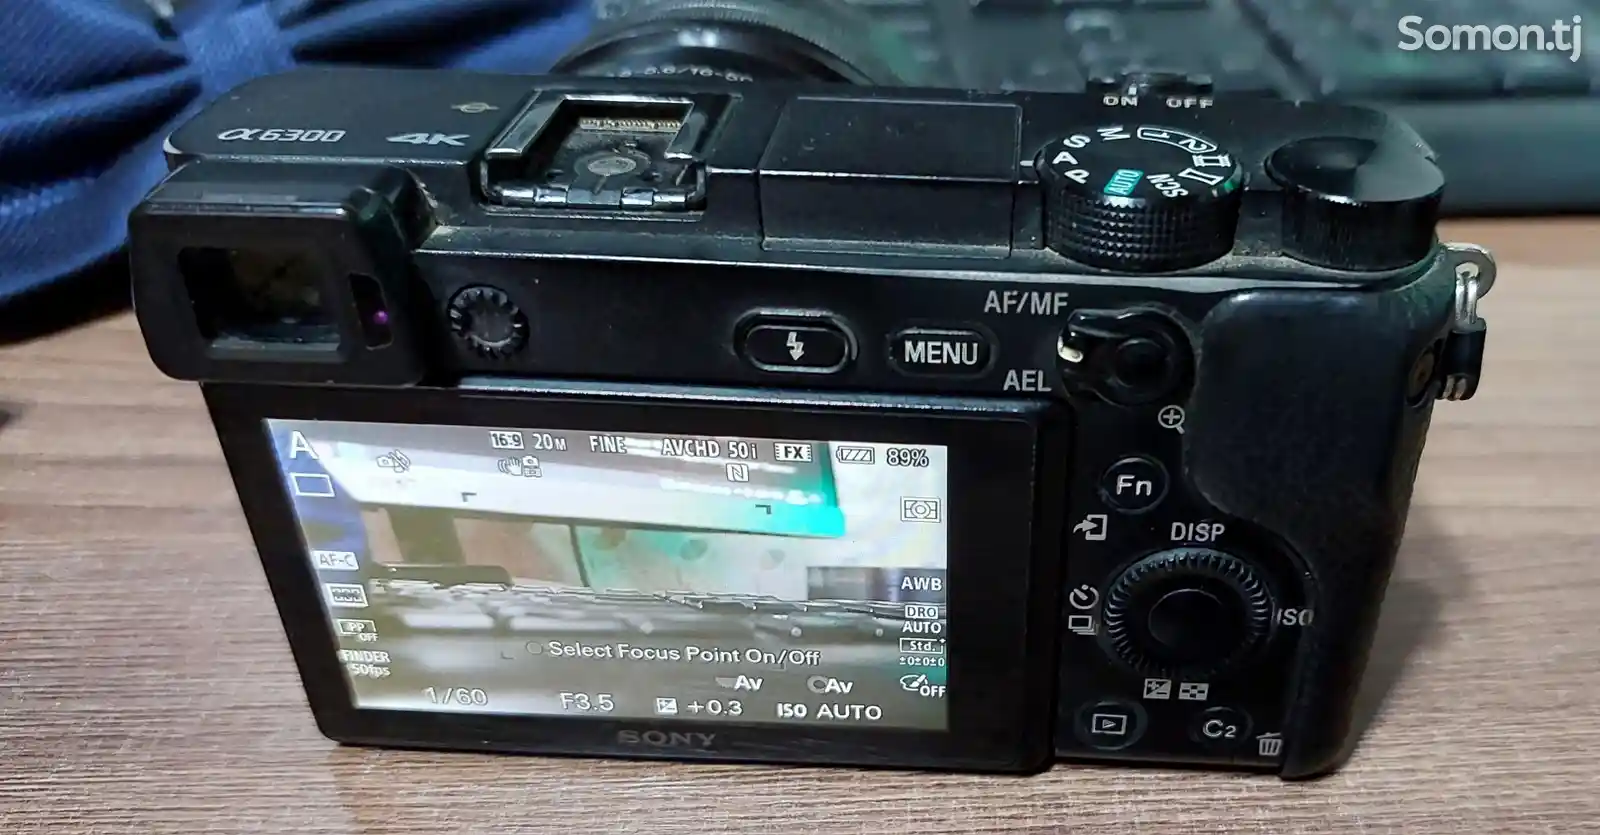 Фотокамера Sony 6300-4